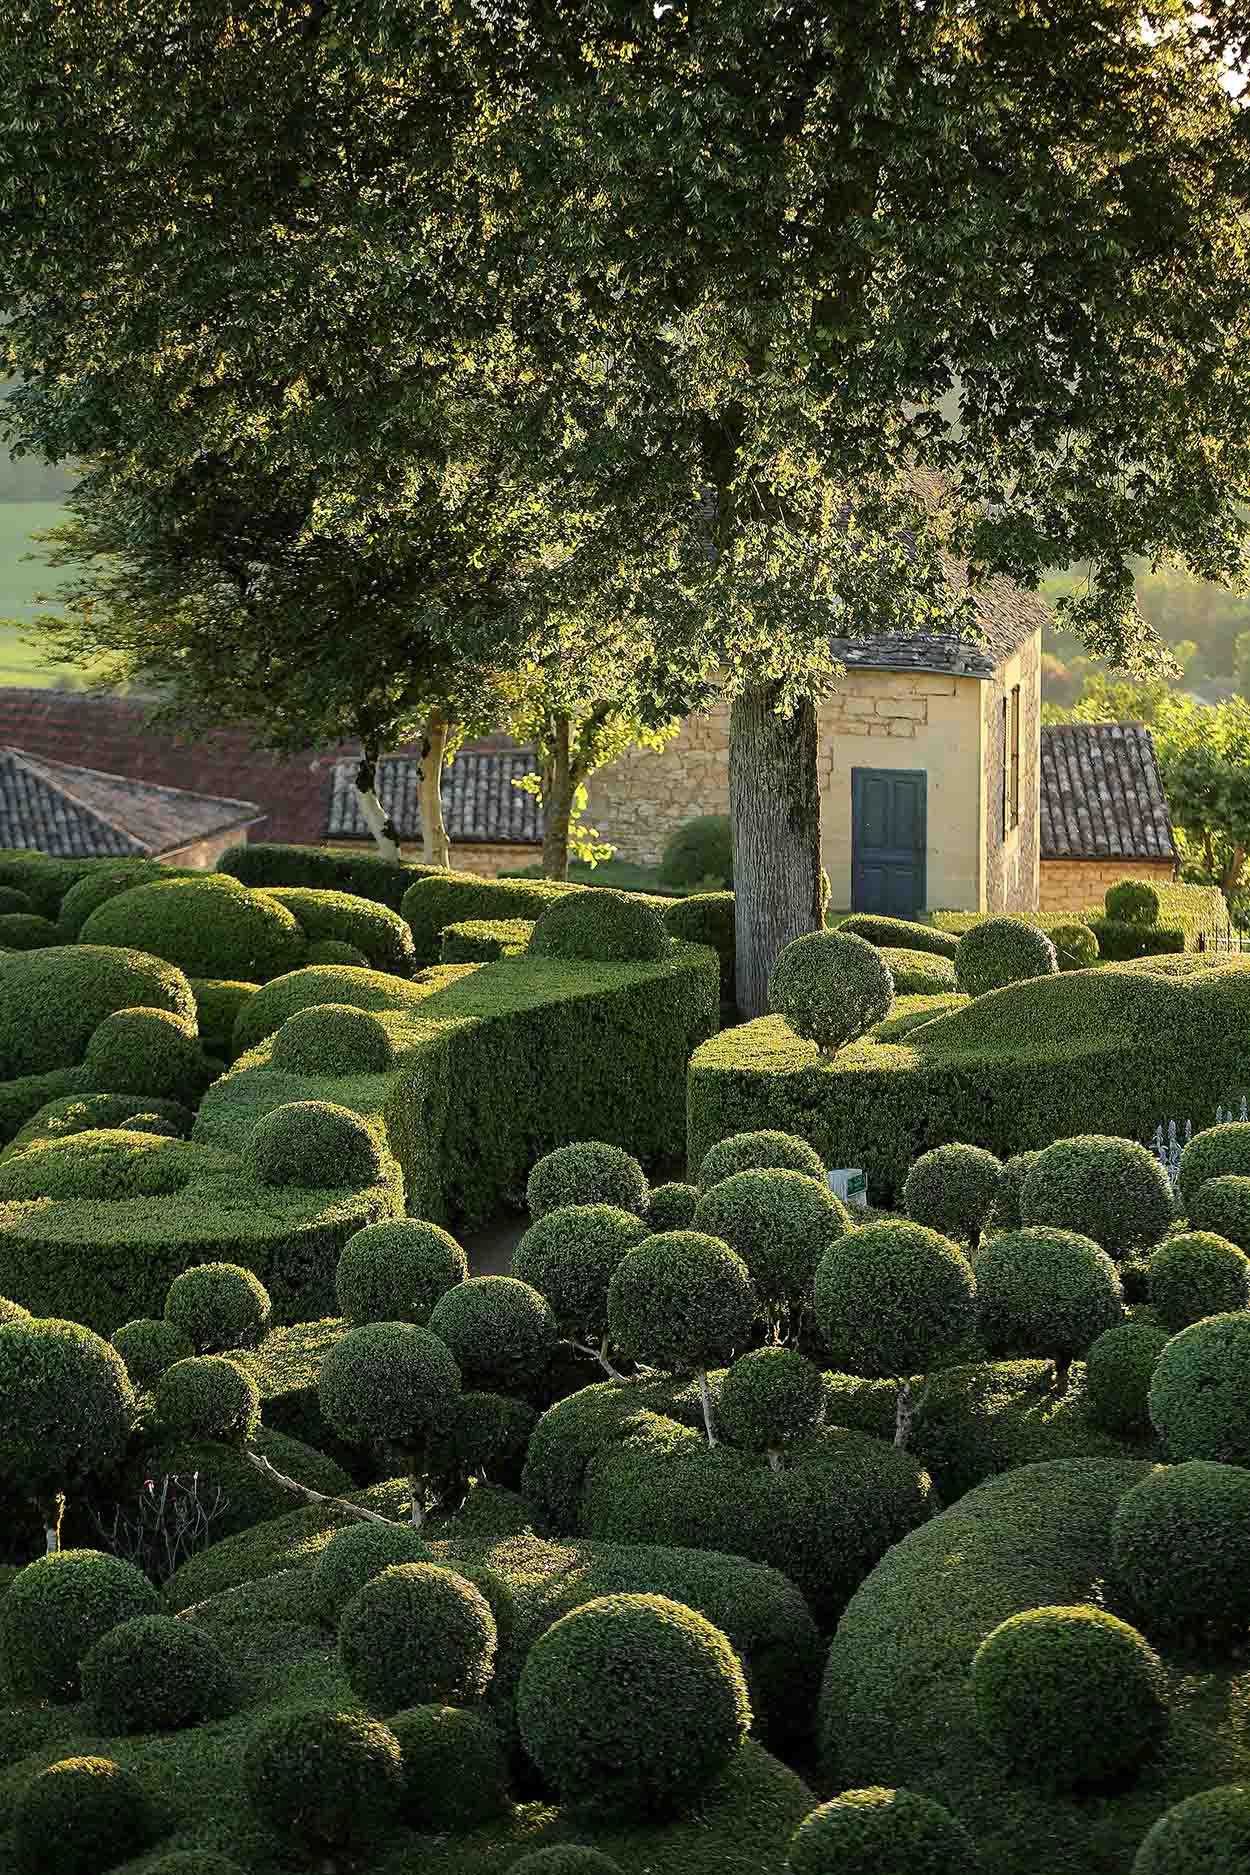 Julien de Cerval, The Gardens of Marqueyssac, Vézac, France